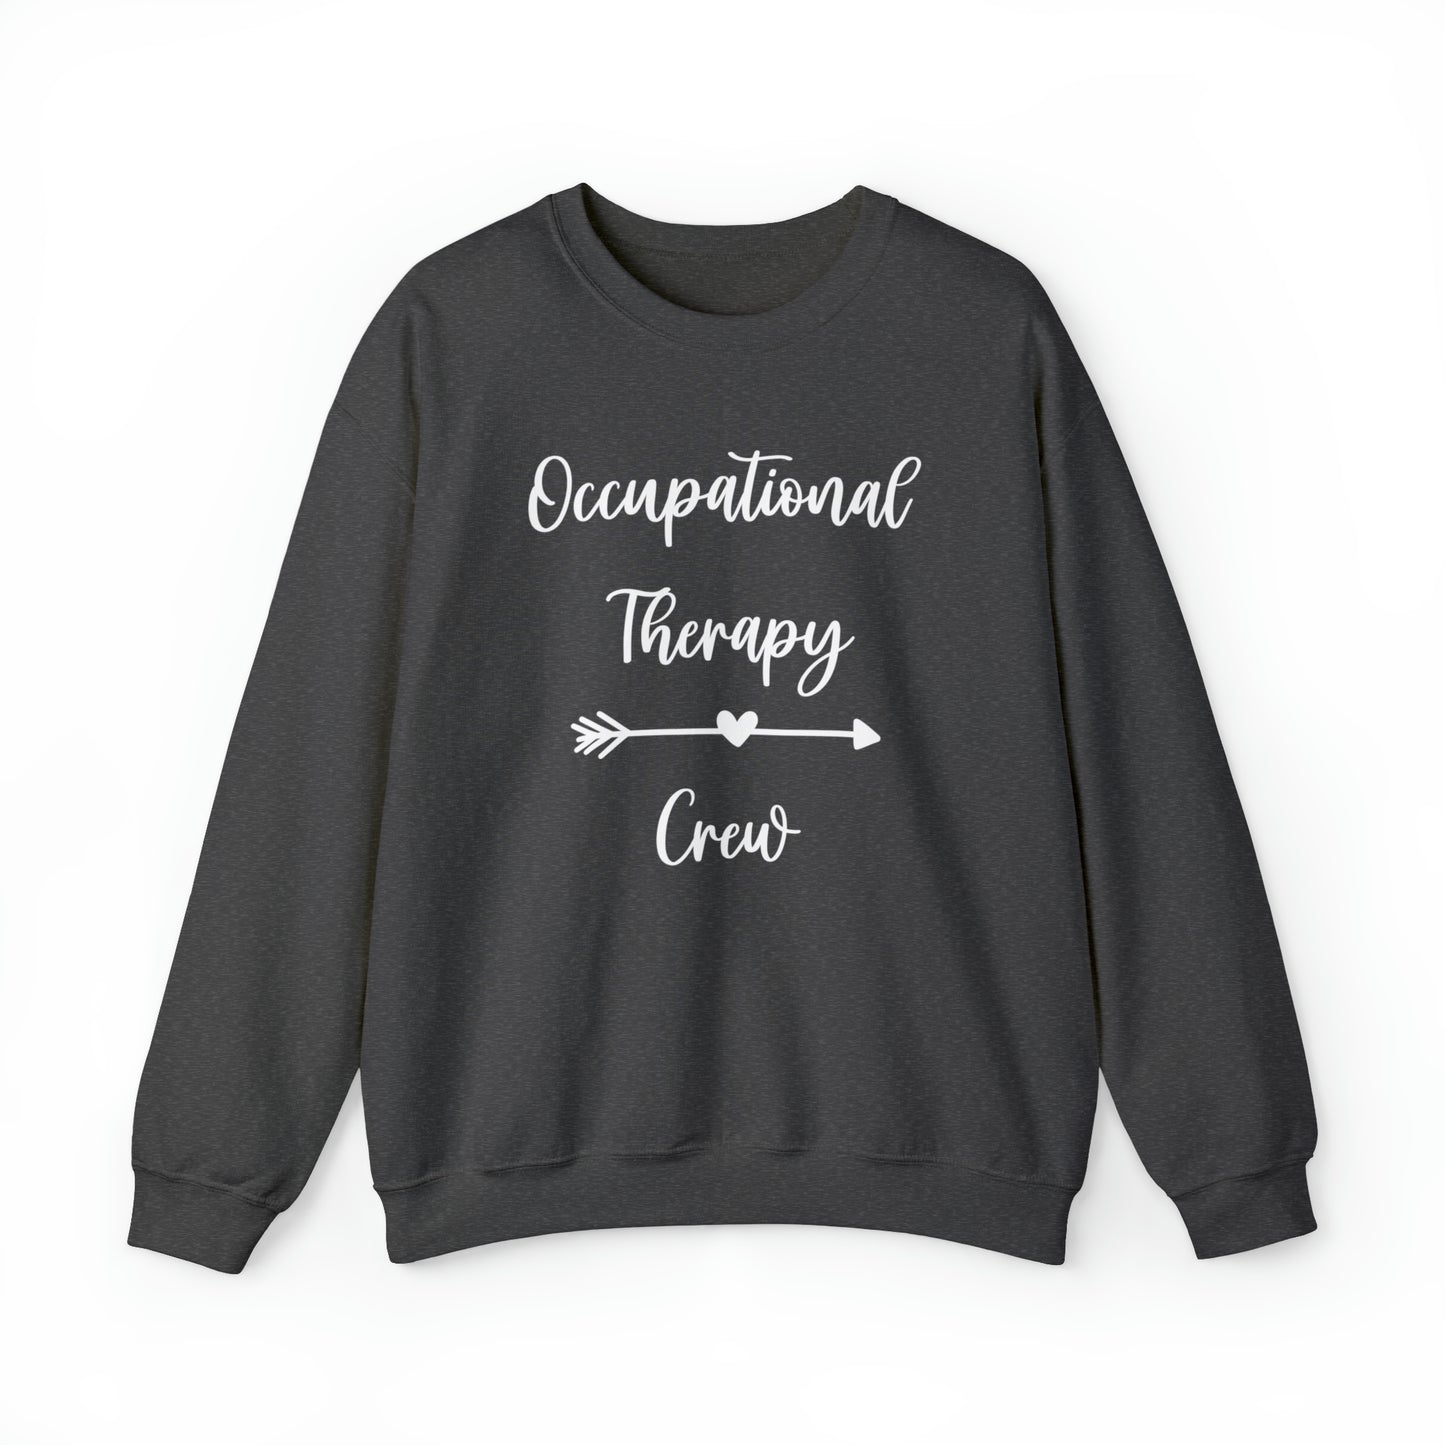 Occupational Therapy Crewneck Sweatshirt